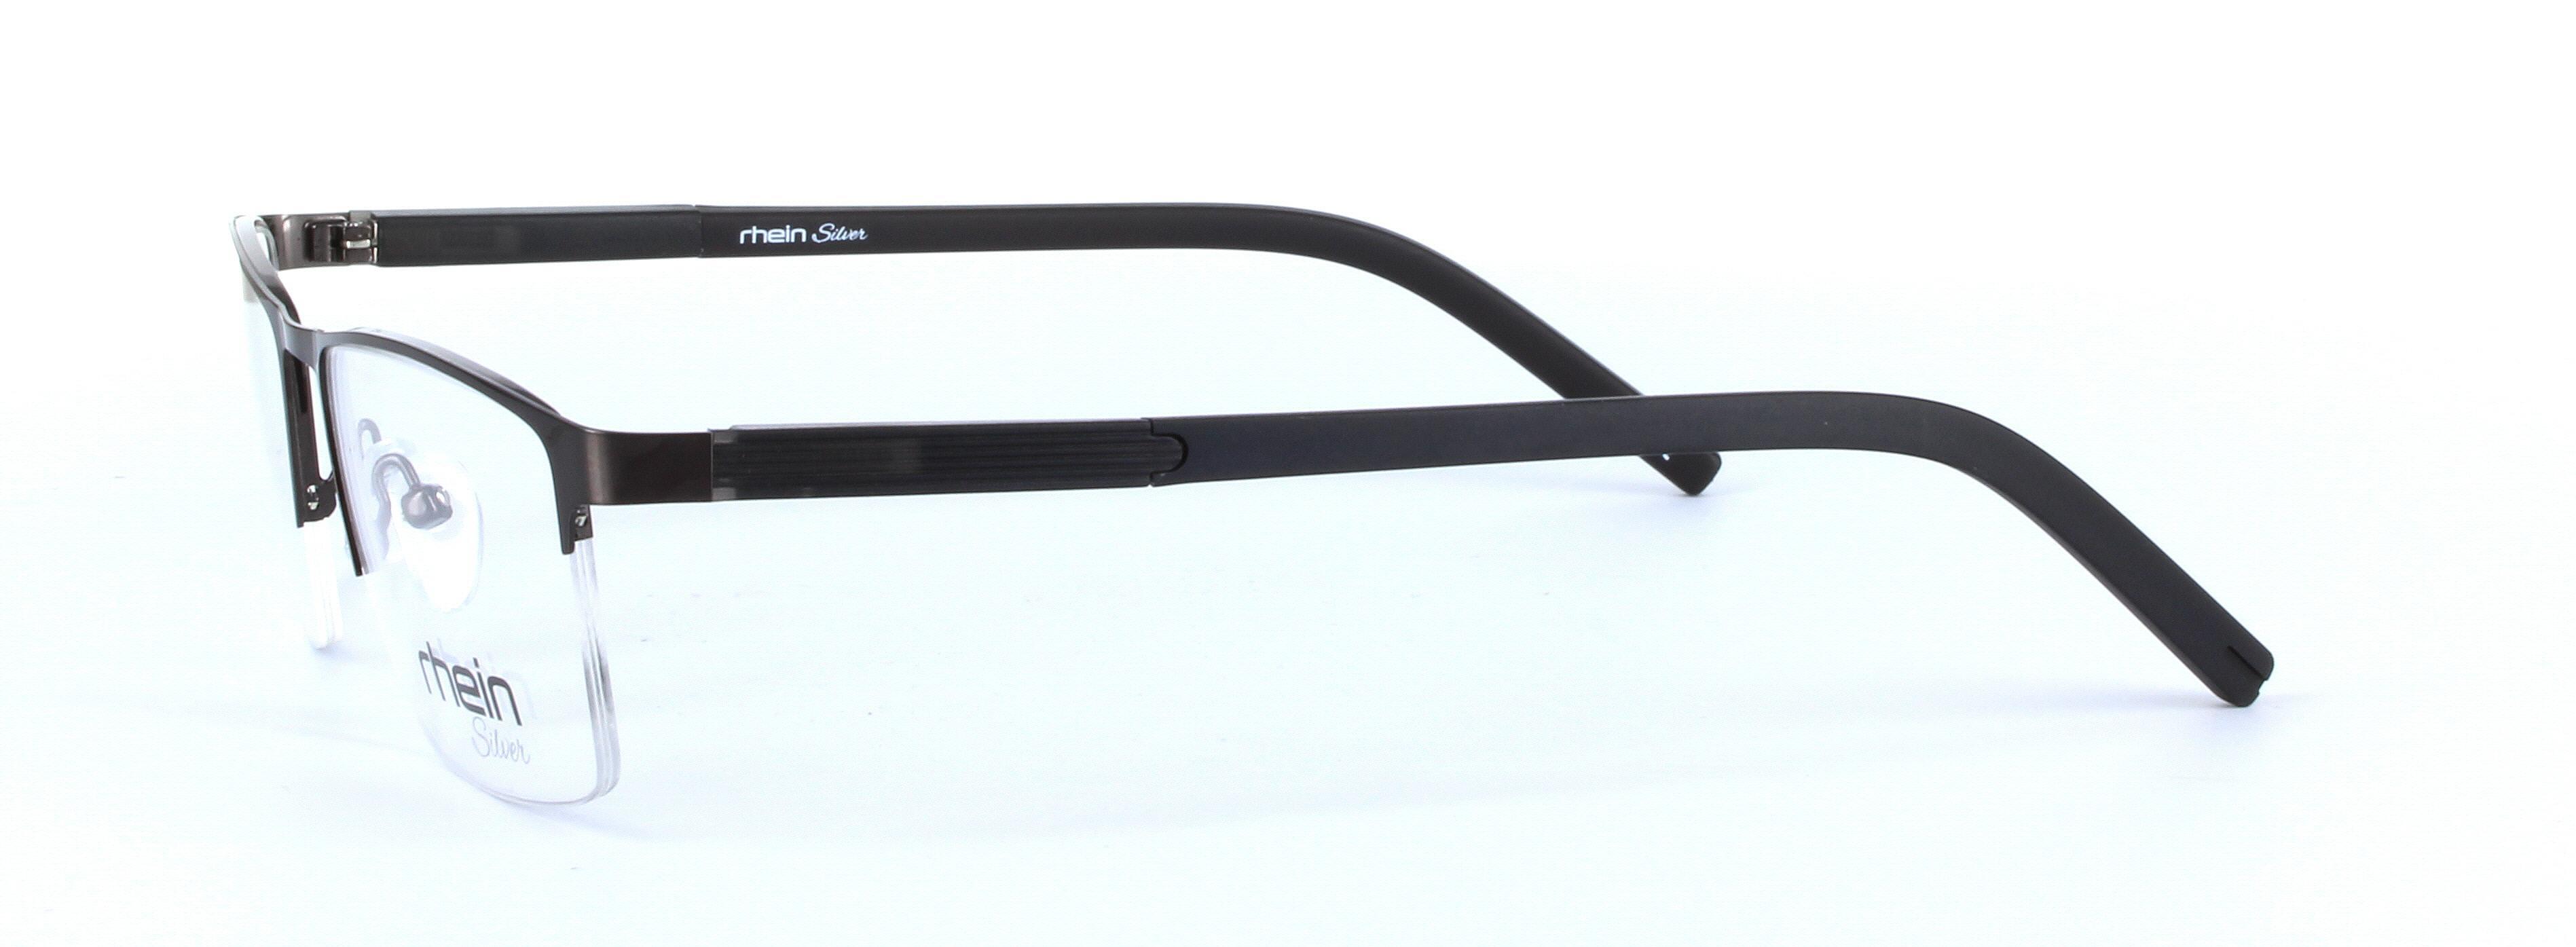 Dell Black Semi Rimless Rectangular Metal Glasses - Image View 2